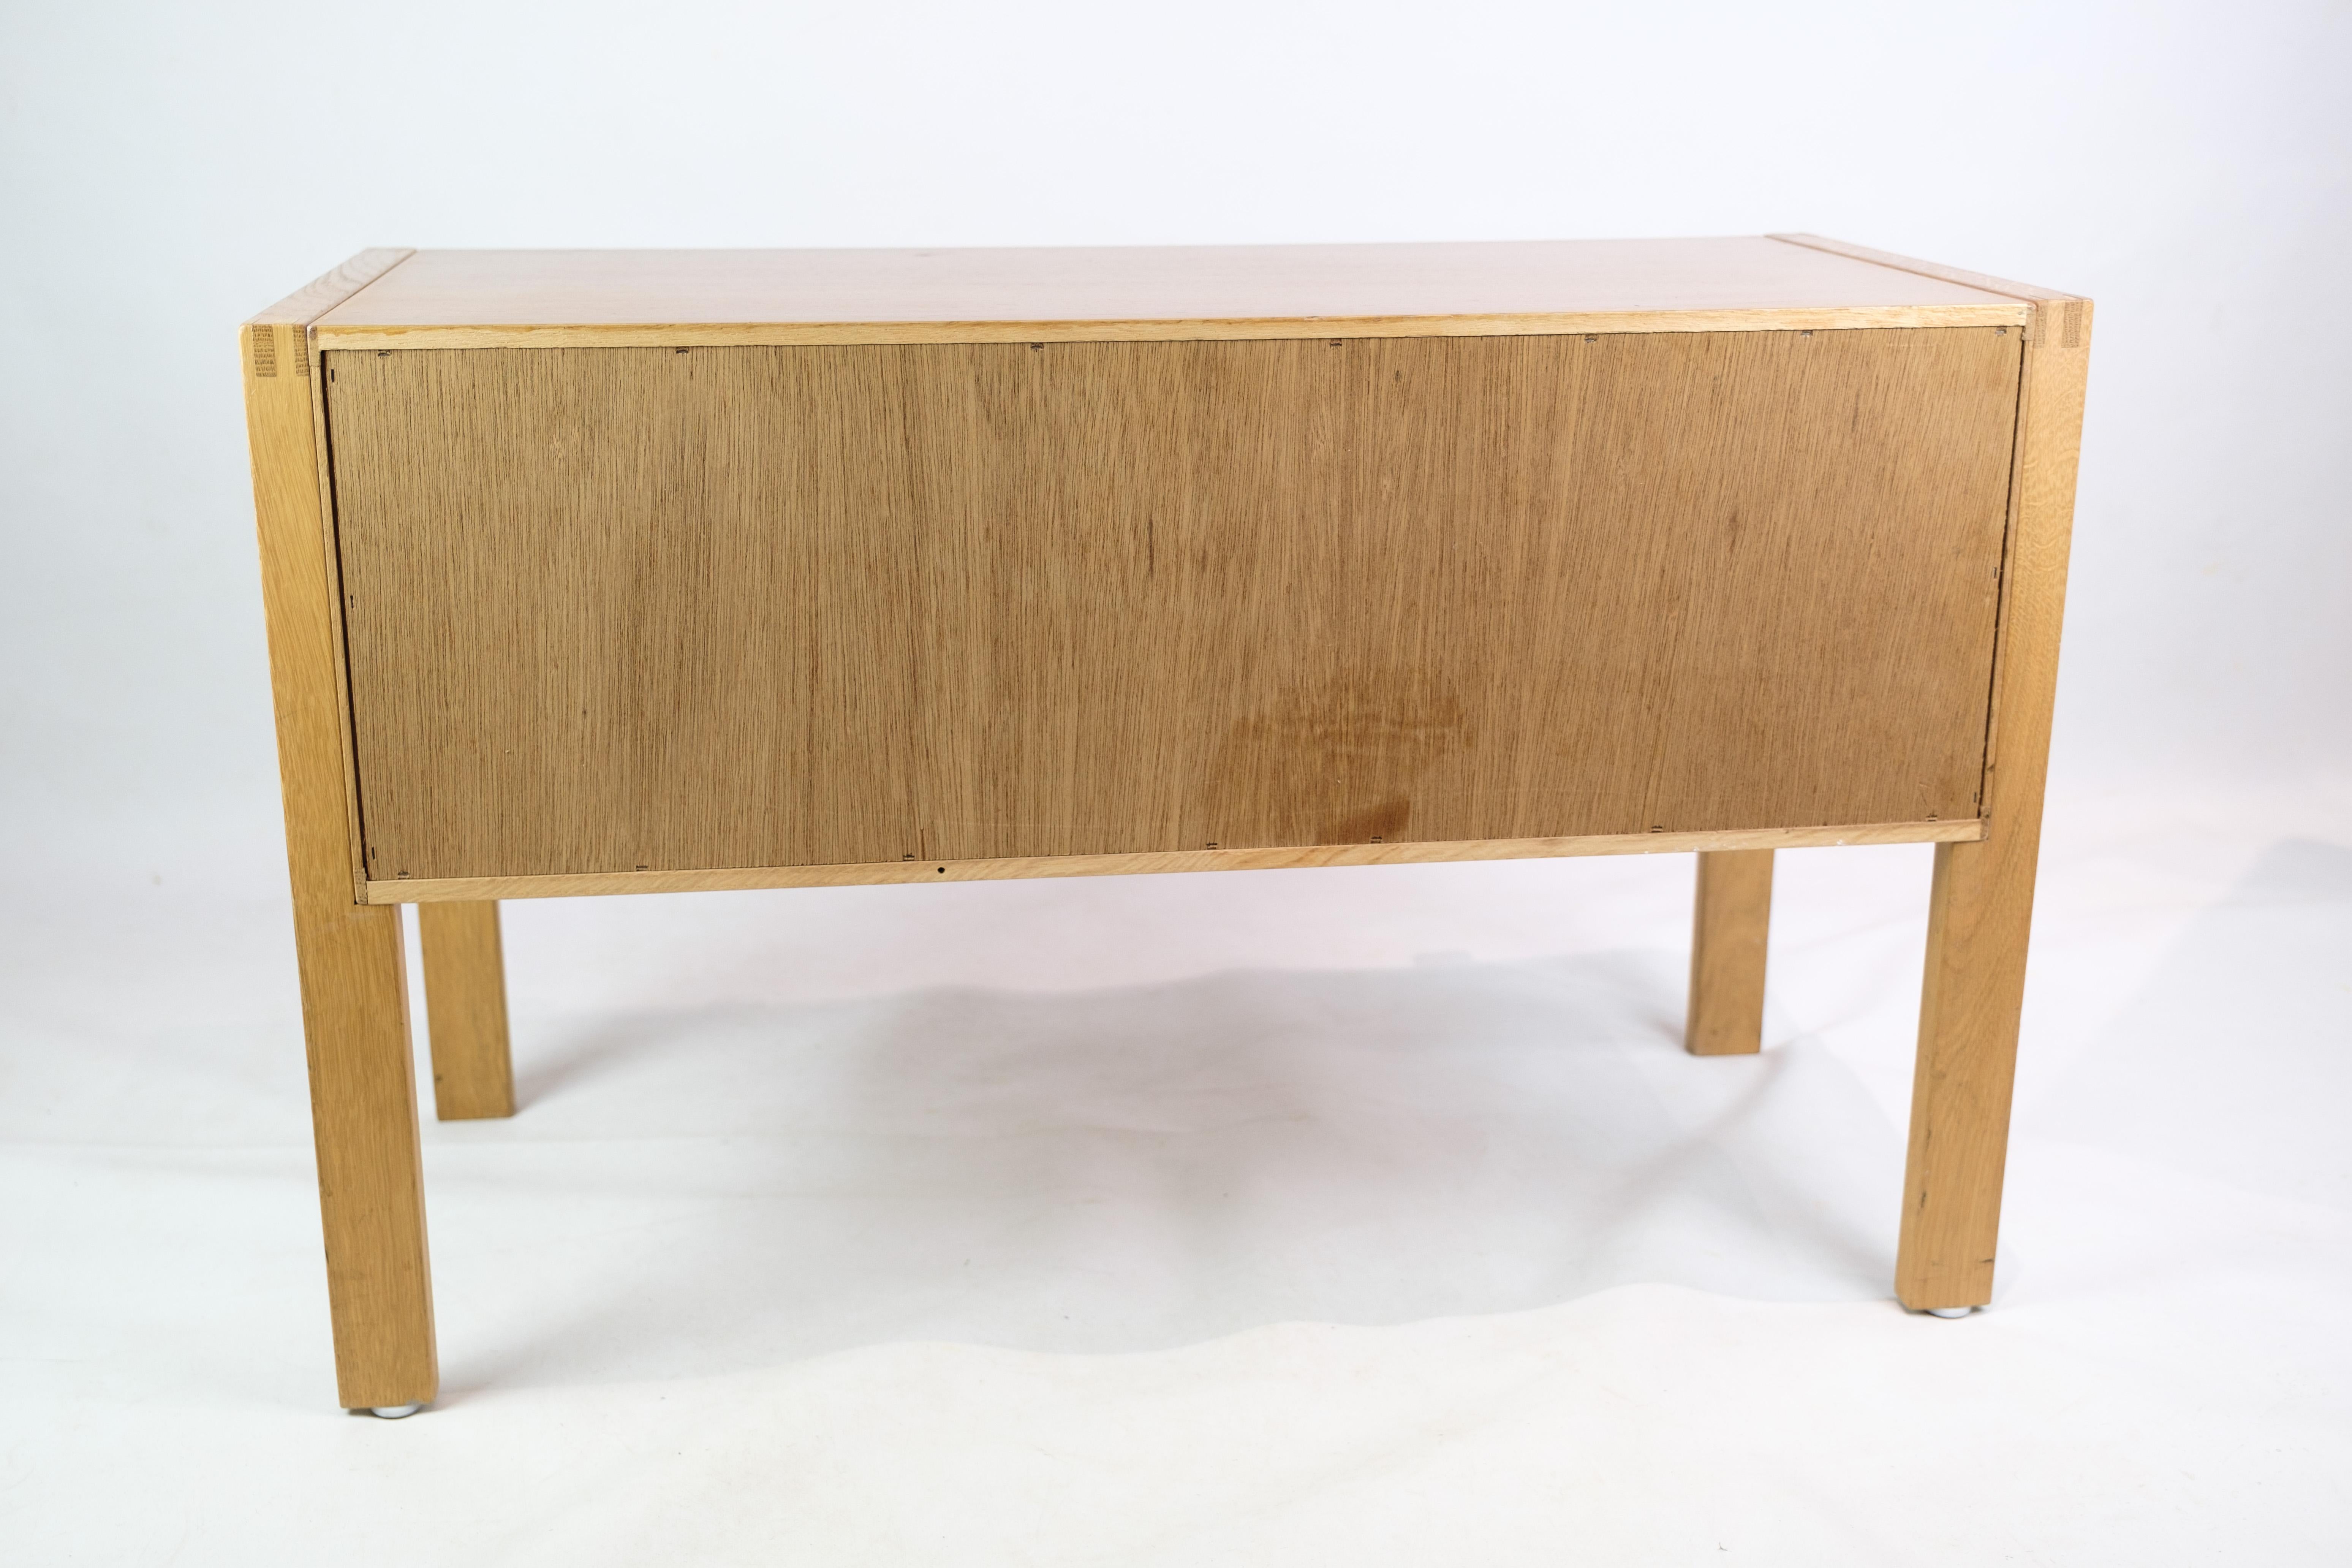 Oak Oblong chest of drawers, Danish furniture design, 1960